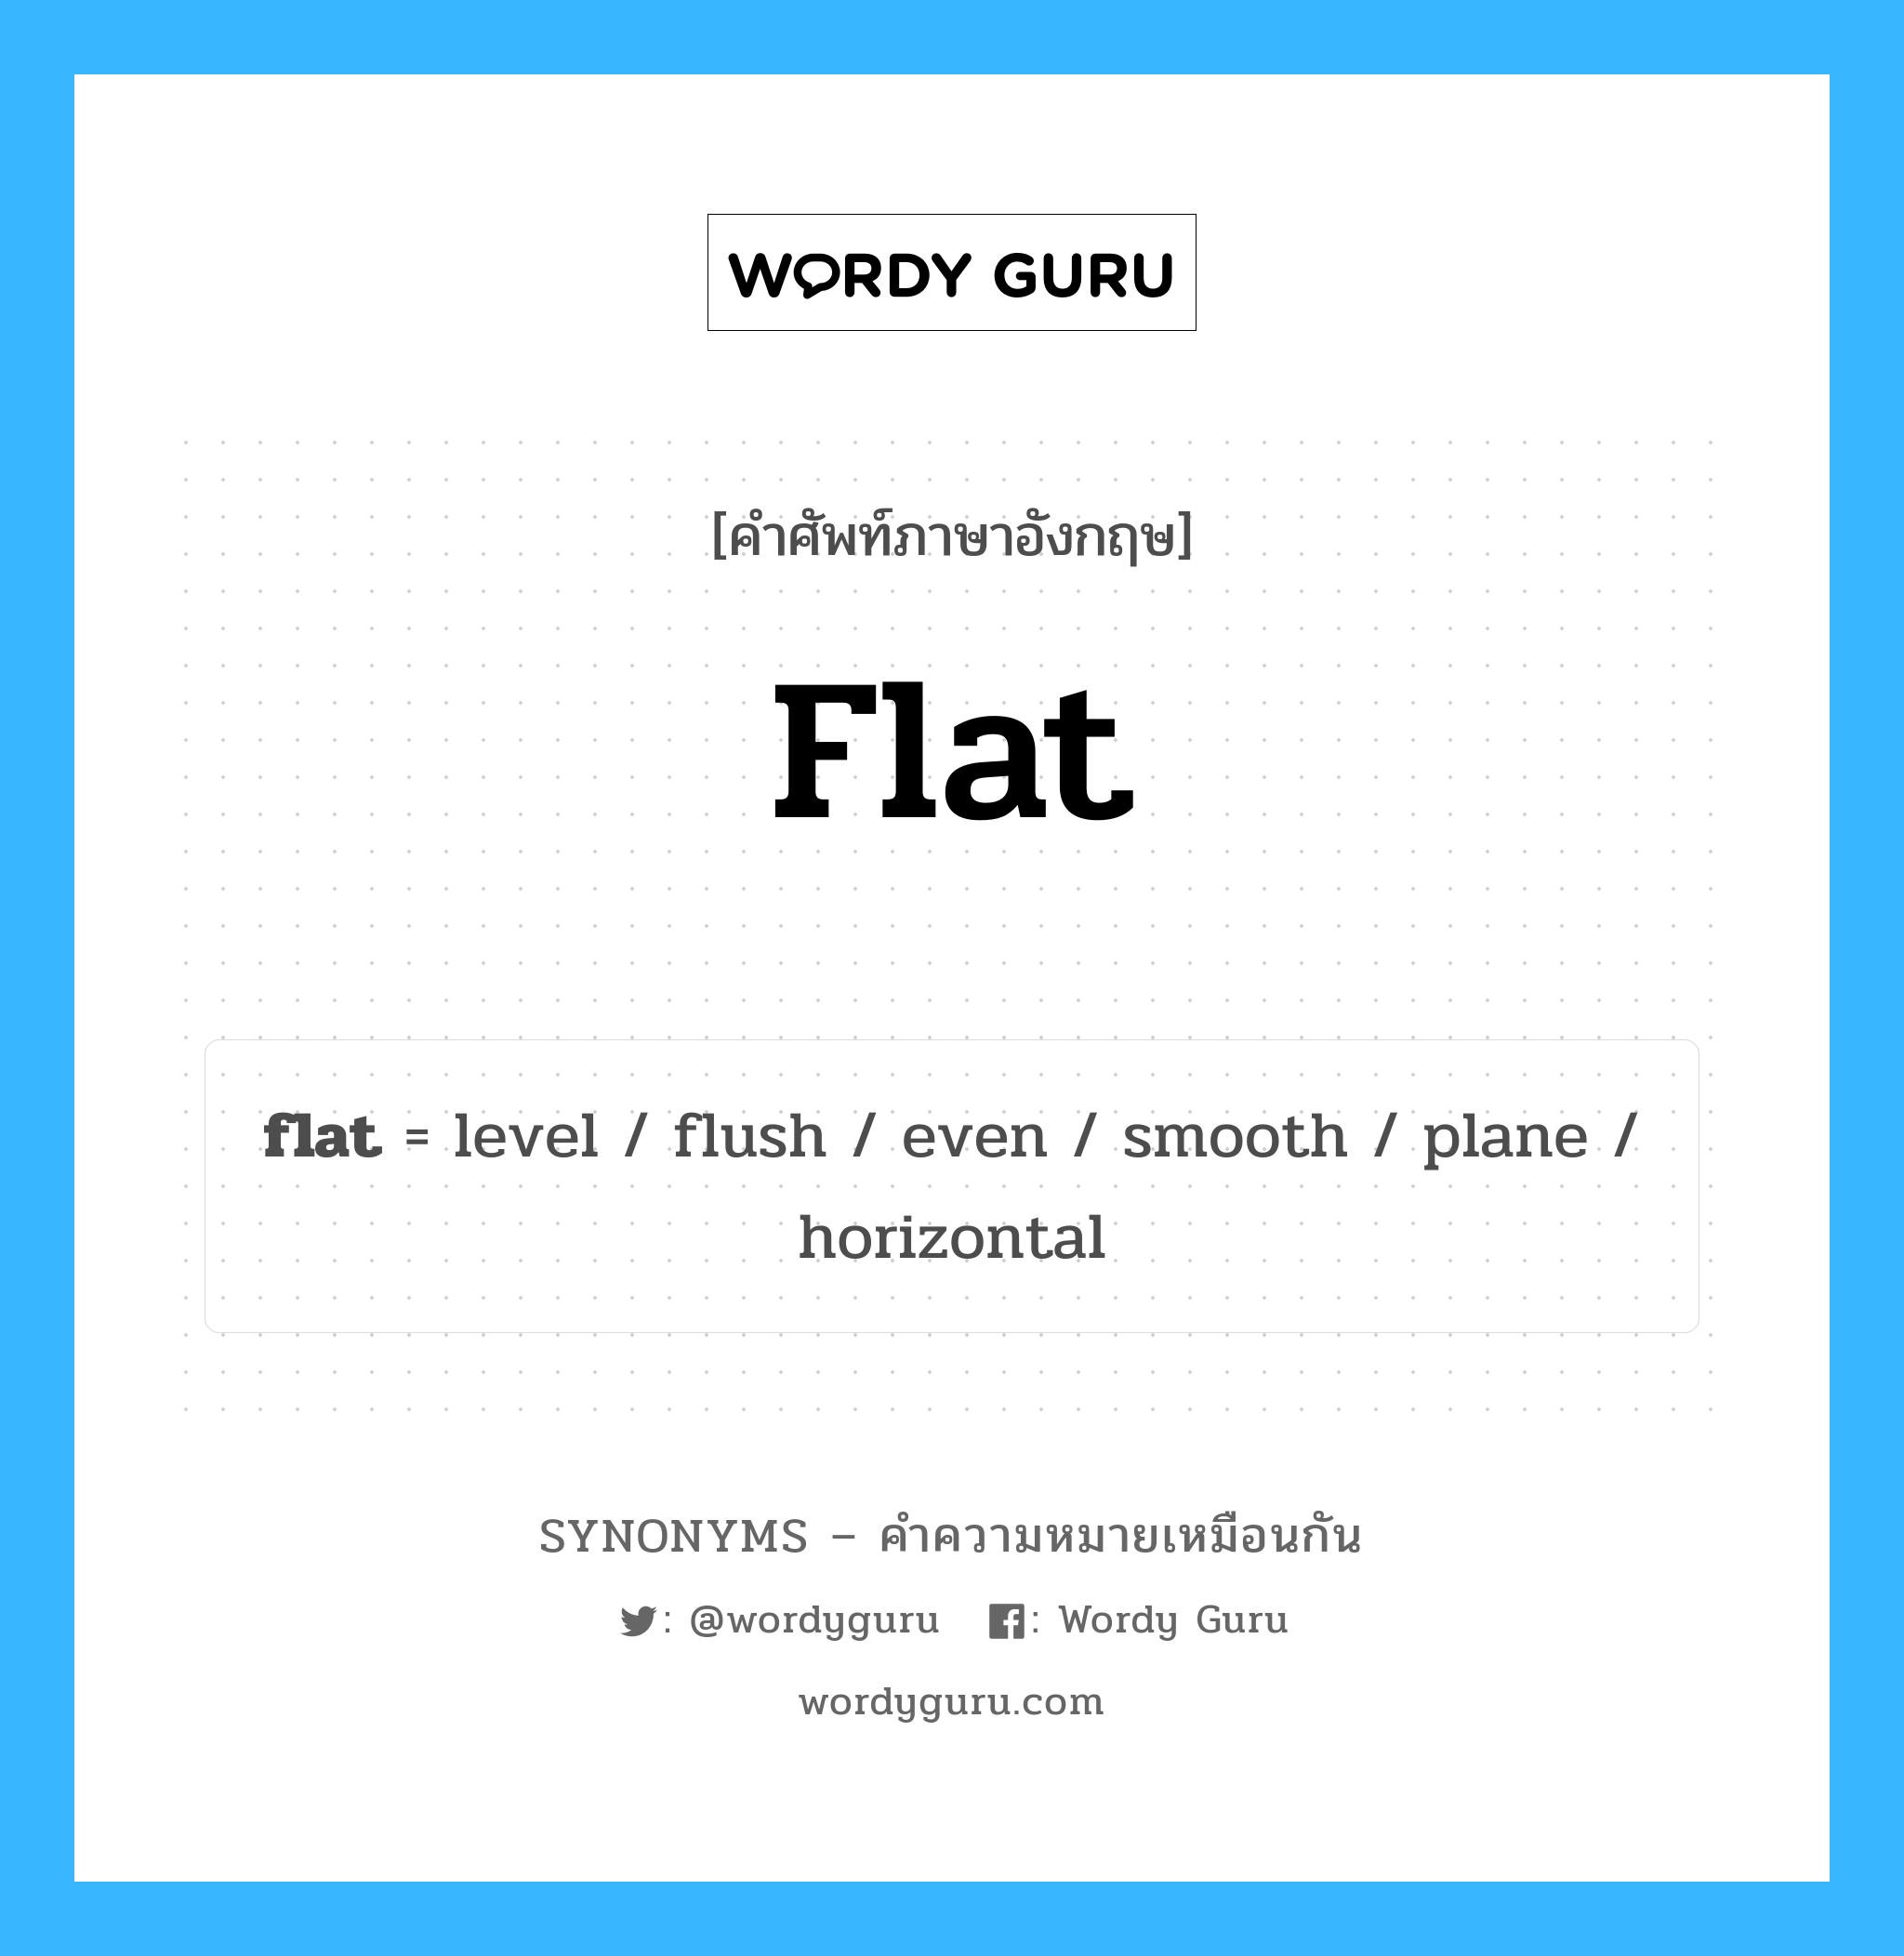 flat เป็นหนึ่งใน level และมีคำอื่น ๆ อีกดังนี้, คำศัพท์ภาษาอังกฤษ flat ความหมายคล้ายกันกับ level แปลว่า ระดับ หมวด level